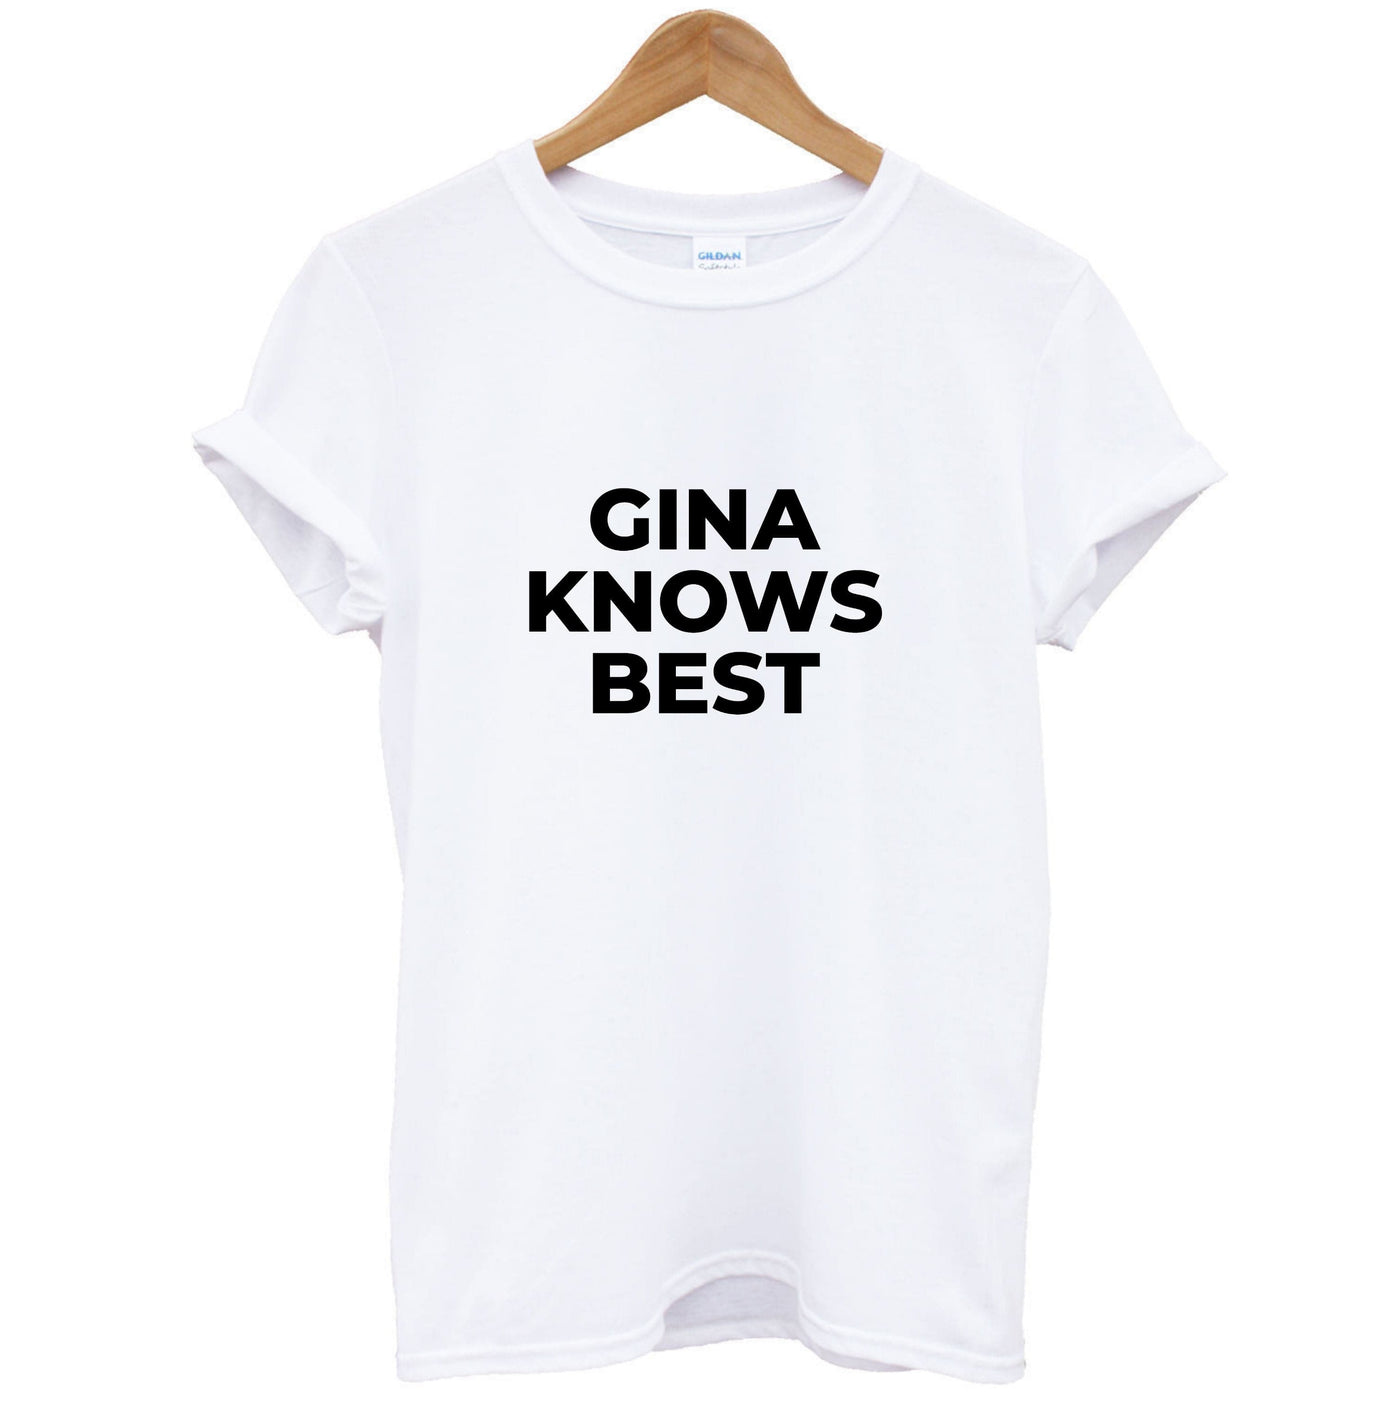 Gina Knows Best - Brooklyn Nine-Nine T-Shirt